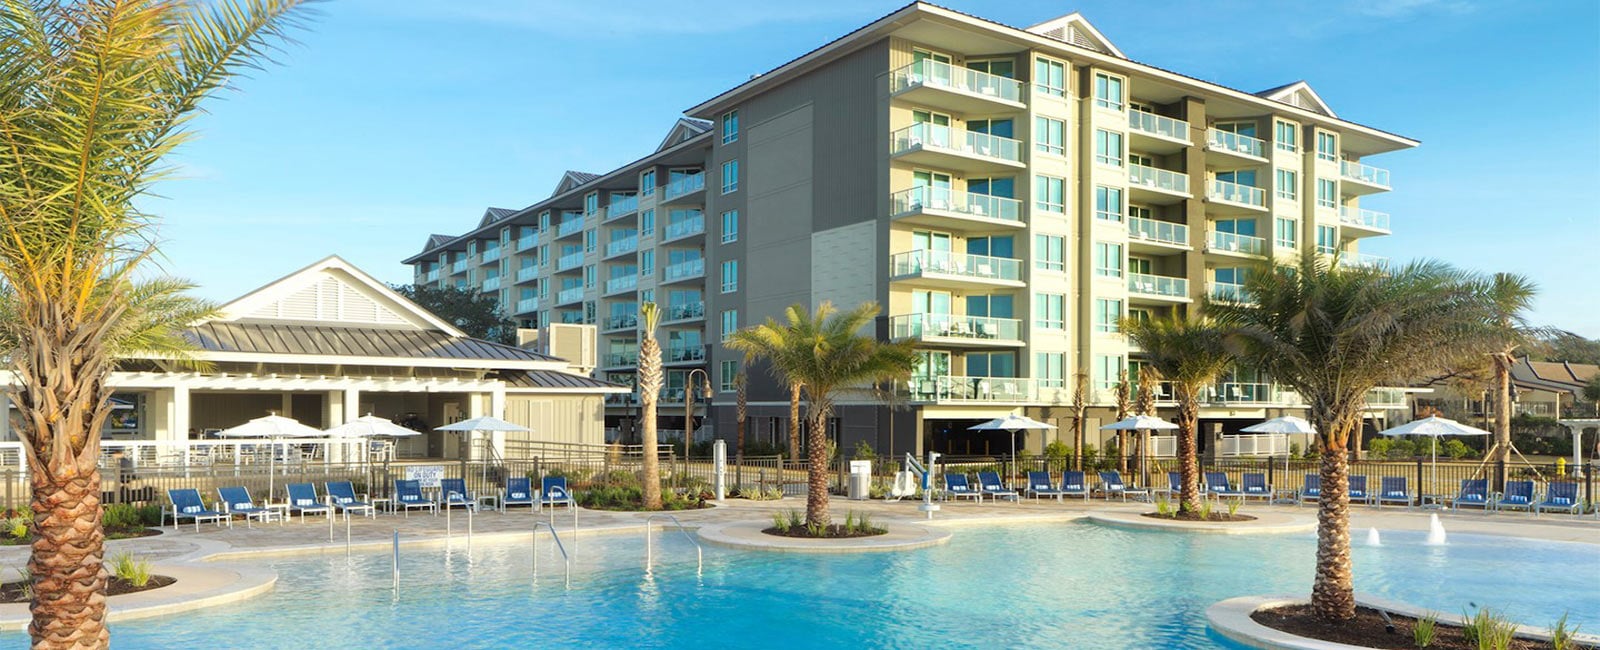 Exterior and Pool Area of Ocean Oak Resort by Hilton Grand Vacations Club on Hilton Head Island, South Carolina